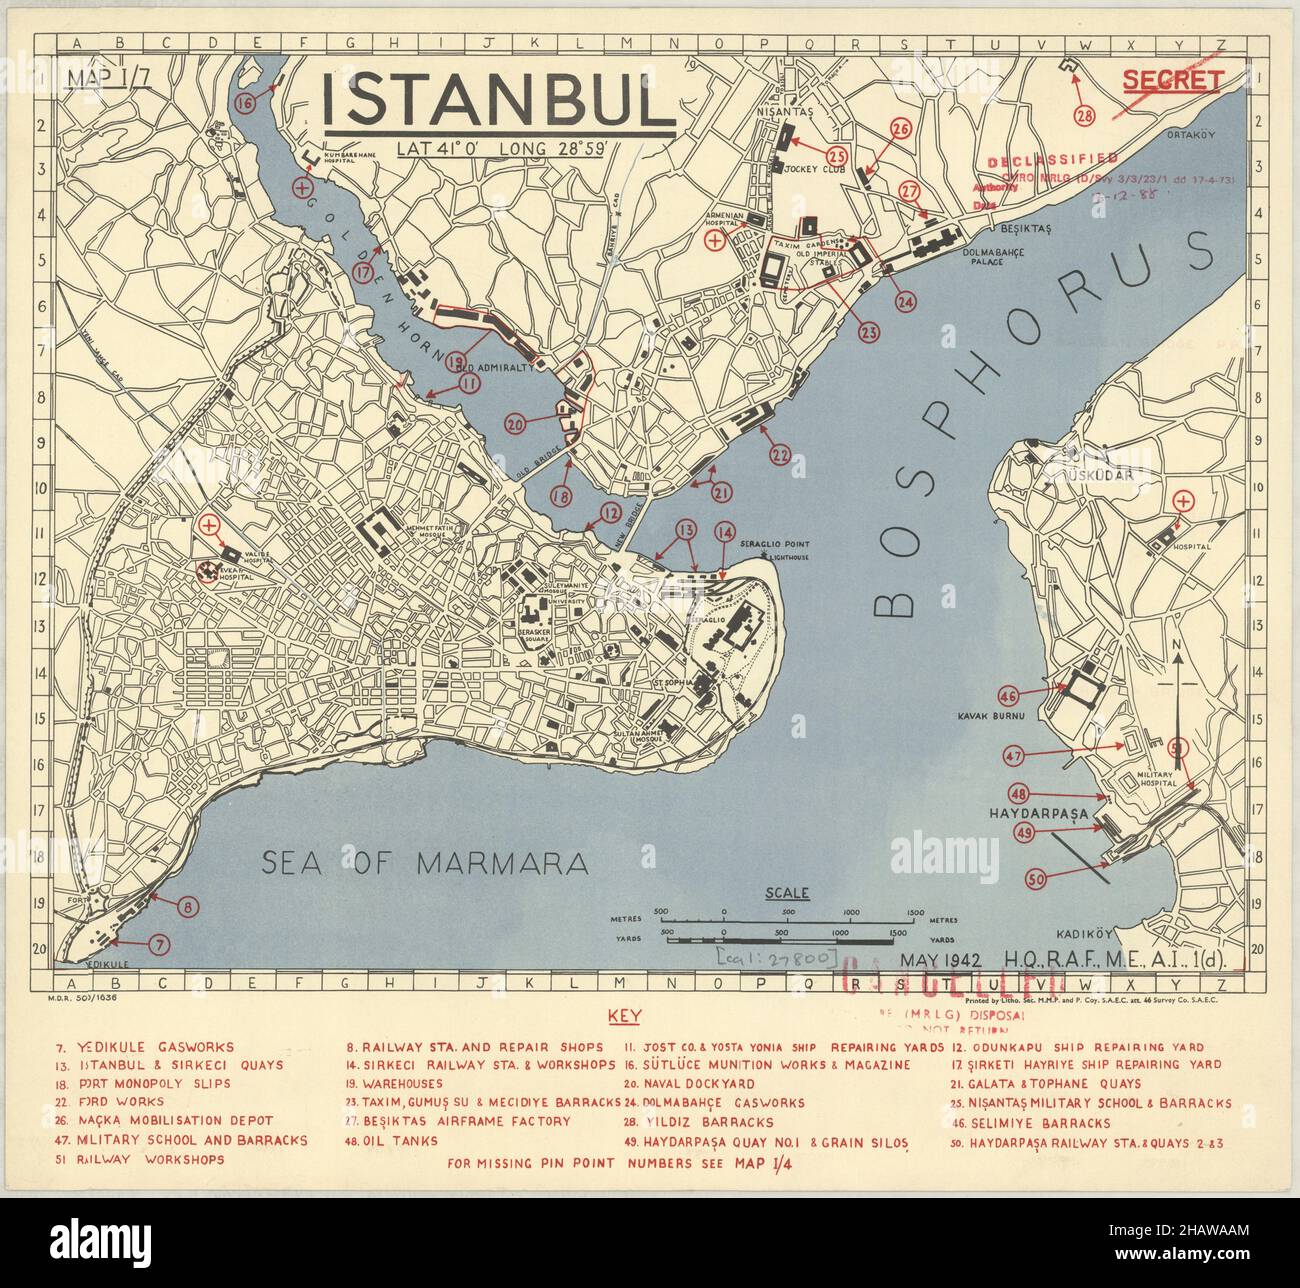 Konstantinopel Karte, Karte von Konstantinopel, Alte Konstantinopel Karte, Retro Konstantinopel Karte, Vintage Konstantinopel Karte, Alte Istanbul Karte, Türkei Karte Stockfoto